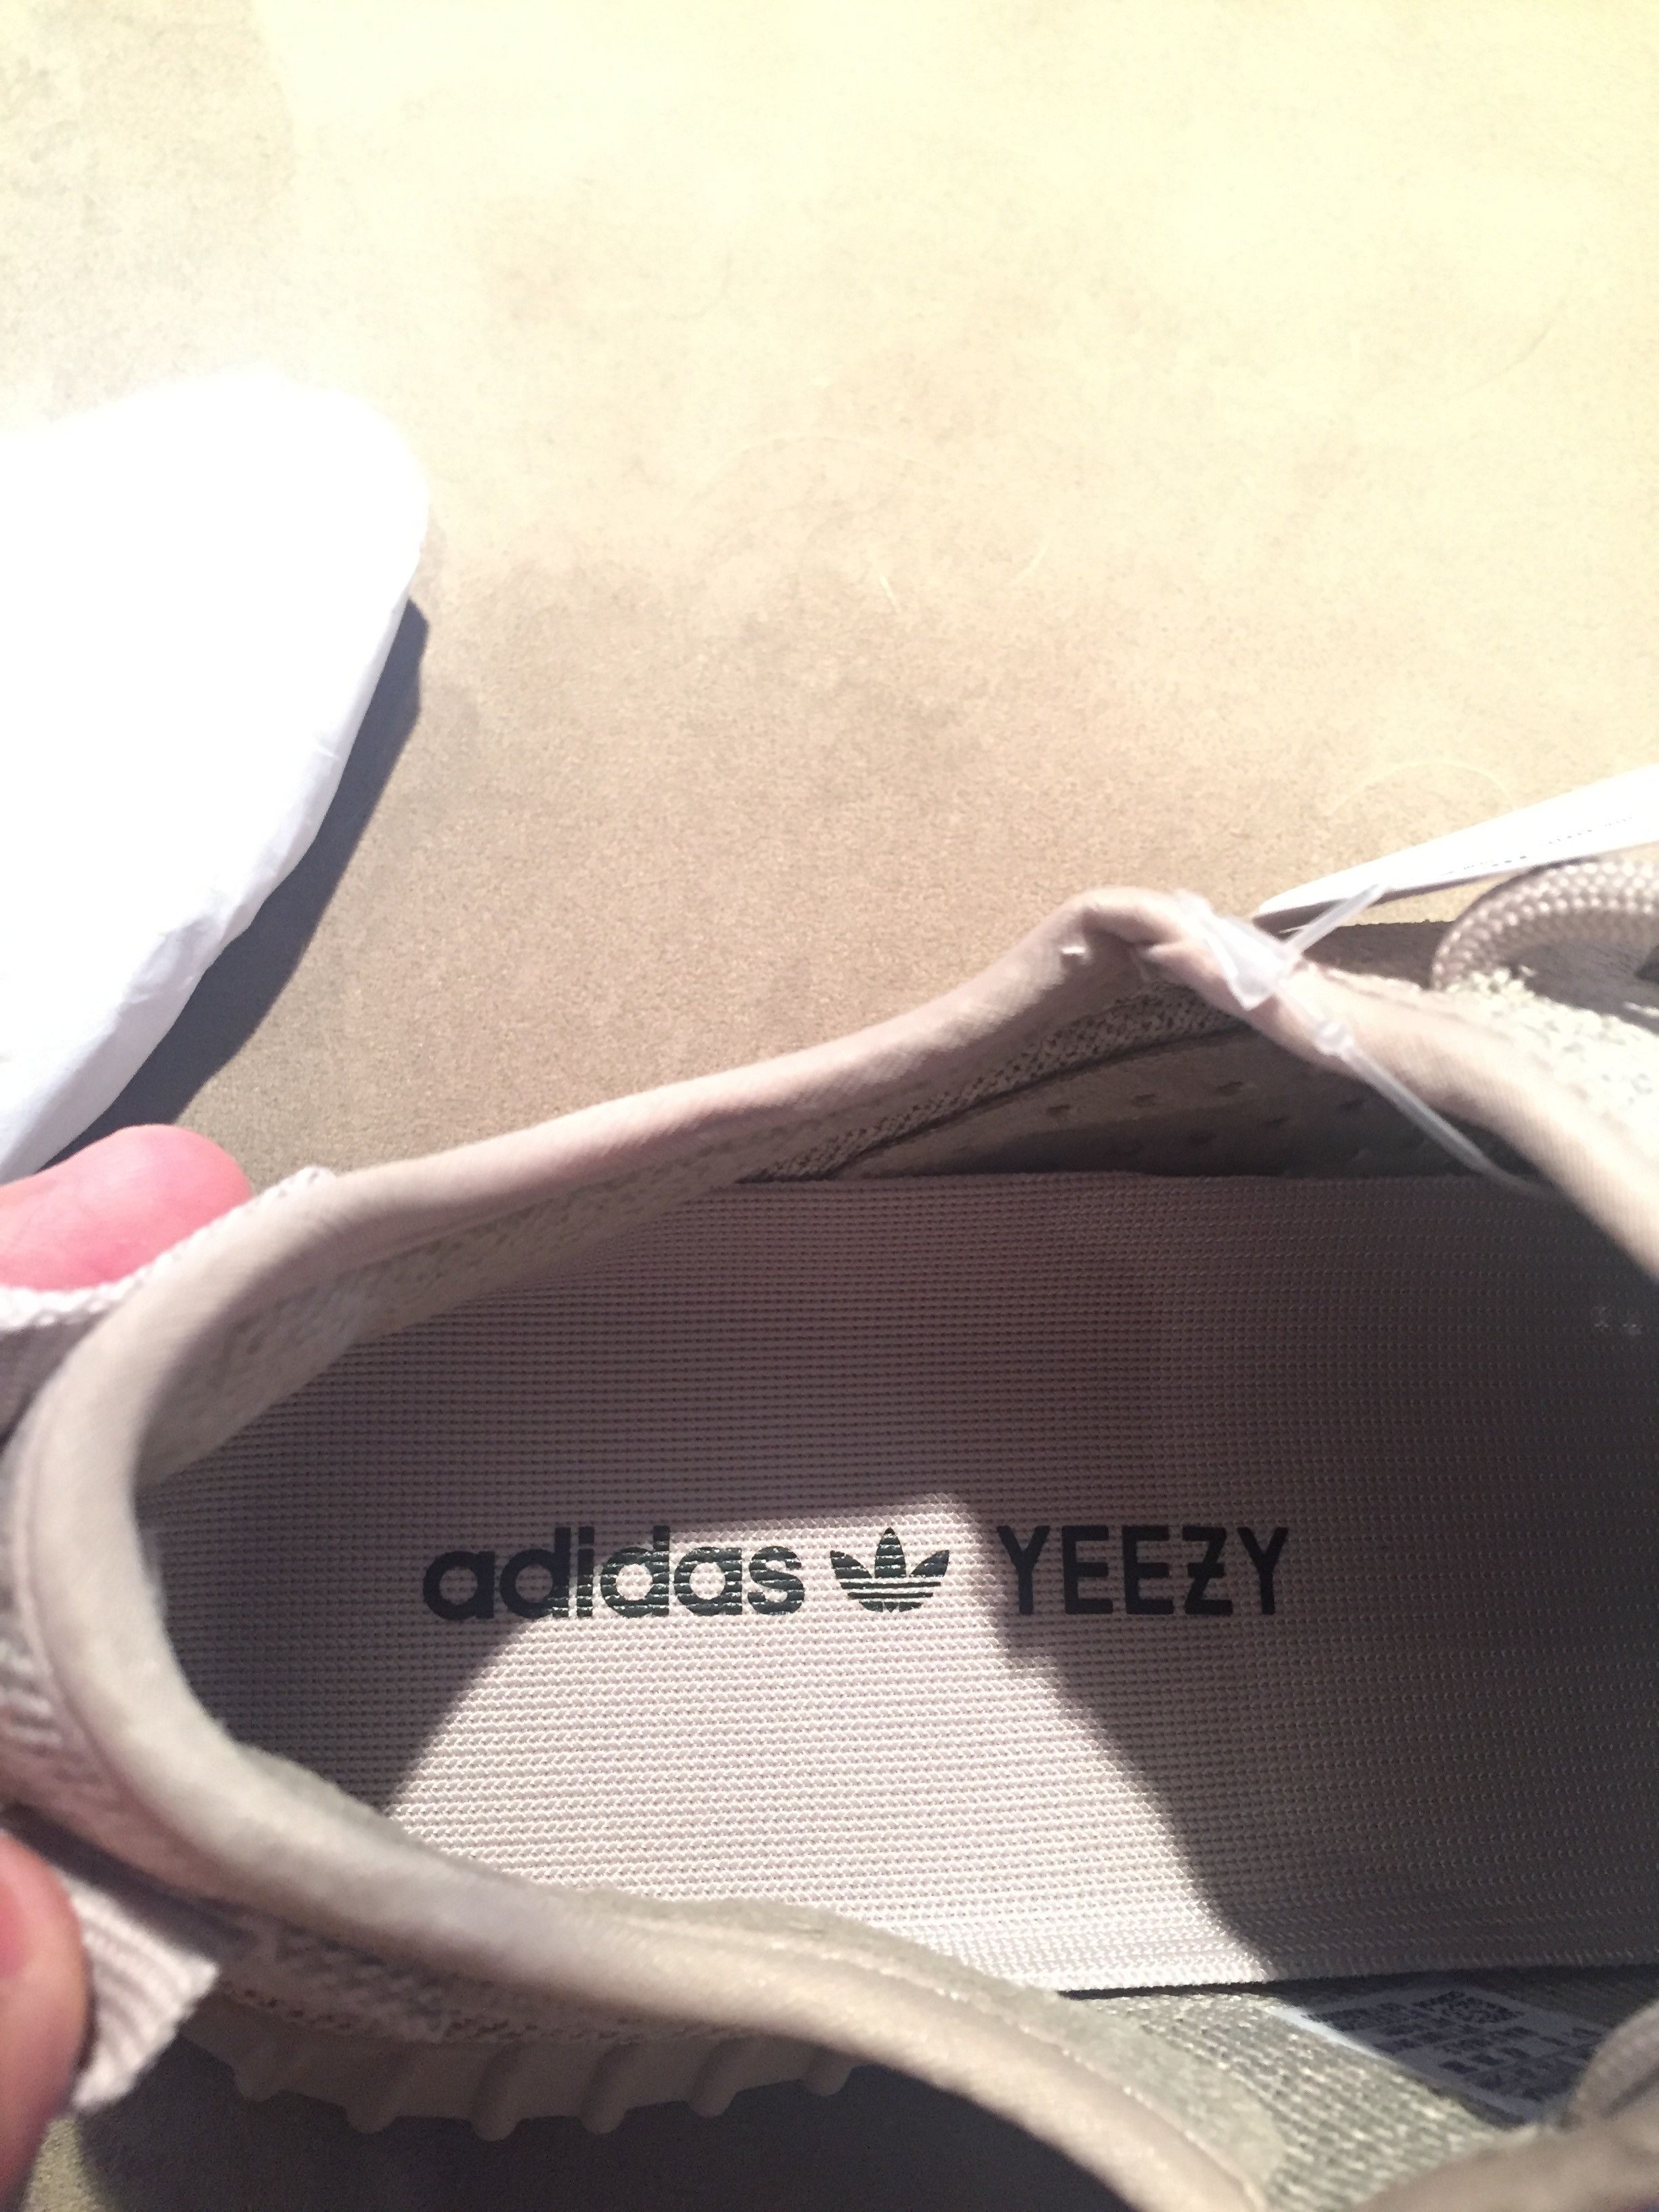 Adidas Oxford Tan Yeezy Boost 350 Size US 8.5 / EU 41-42 - 7 Thumbnail